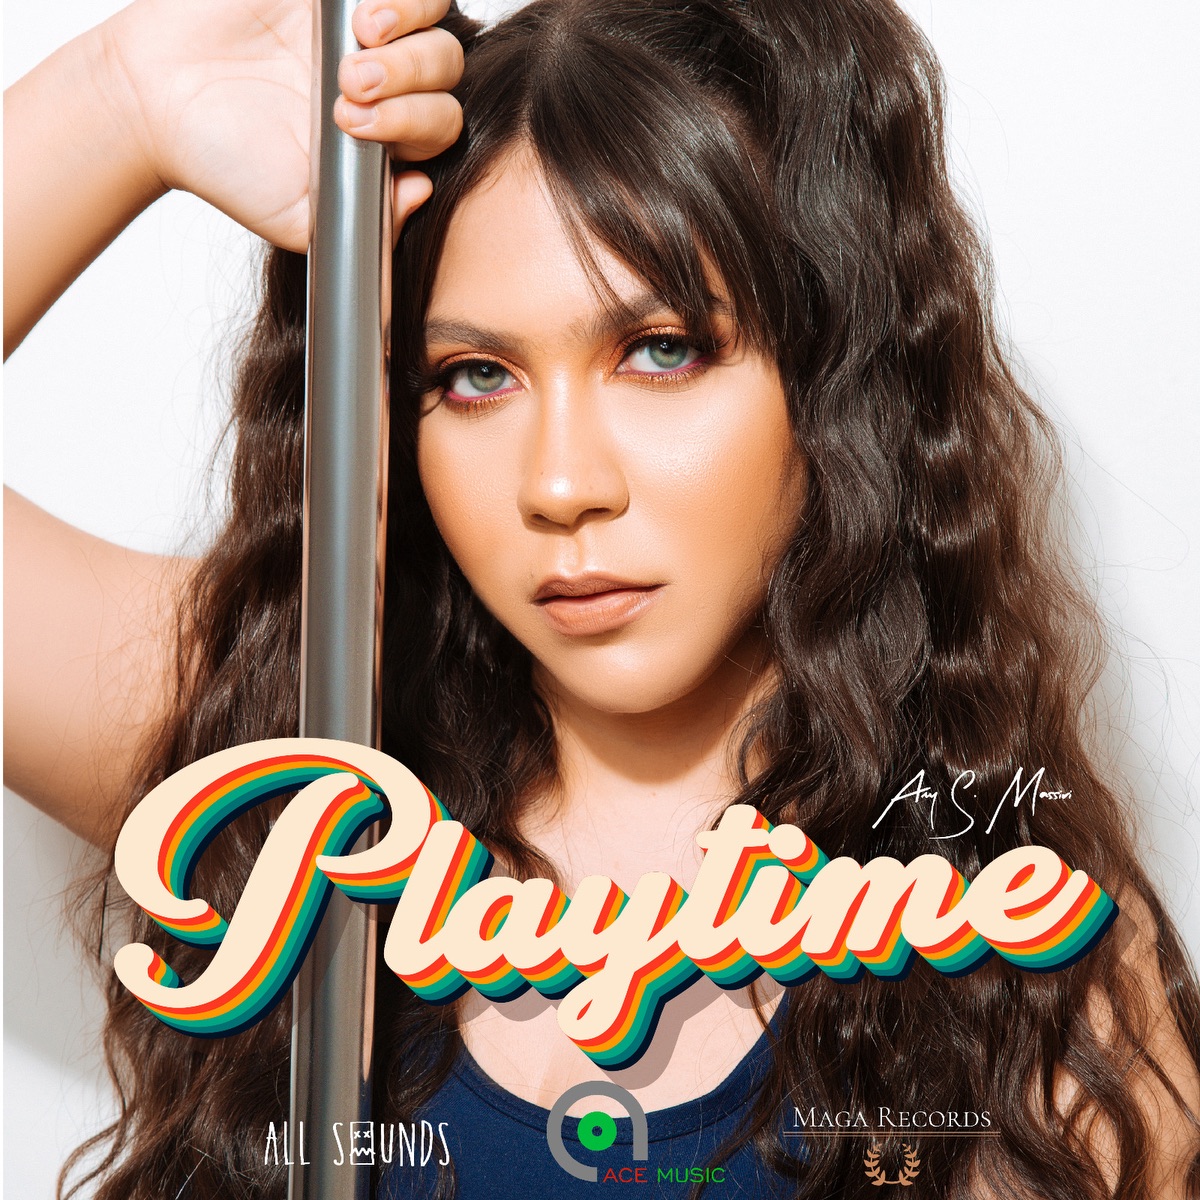  Amy S Massiri estrena su segundo single “PLAYTIME”